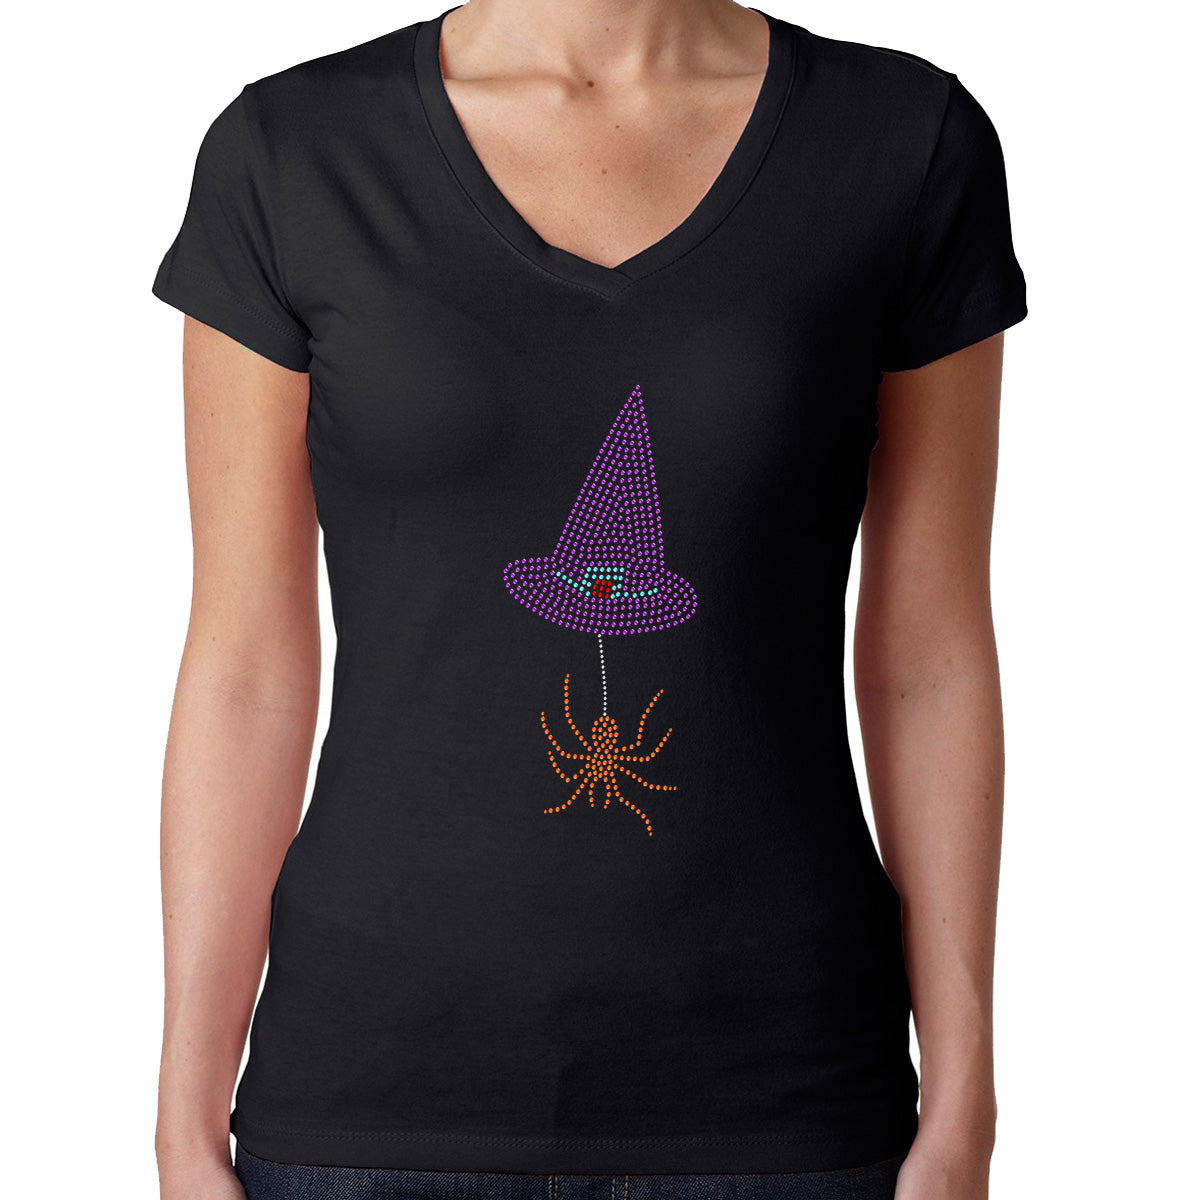 Womens T-Shirt Rhinestone Bling Black Fitted Tee Halloween Hanging Spider Hat